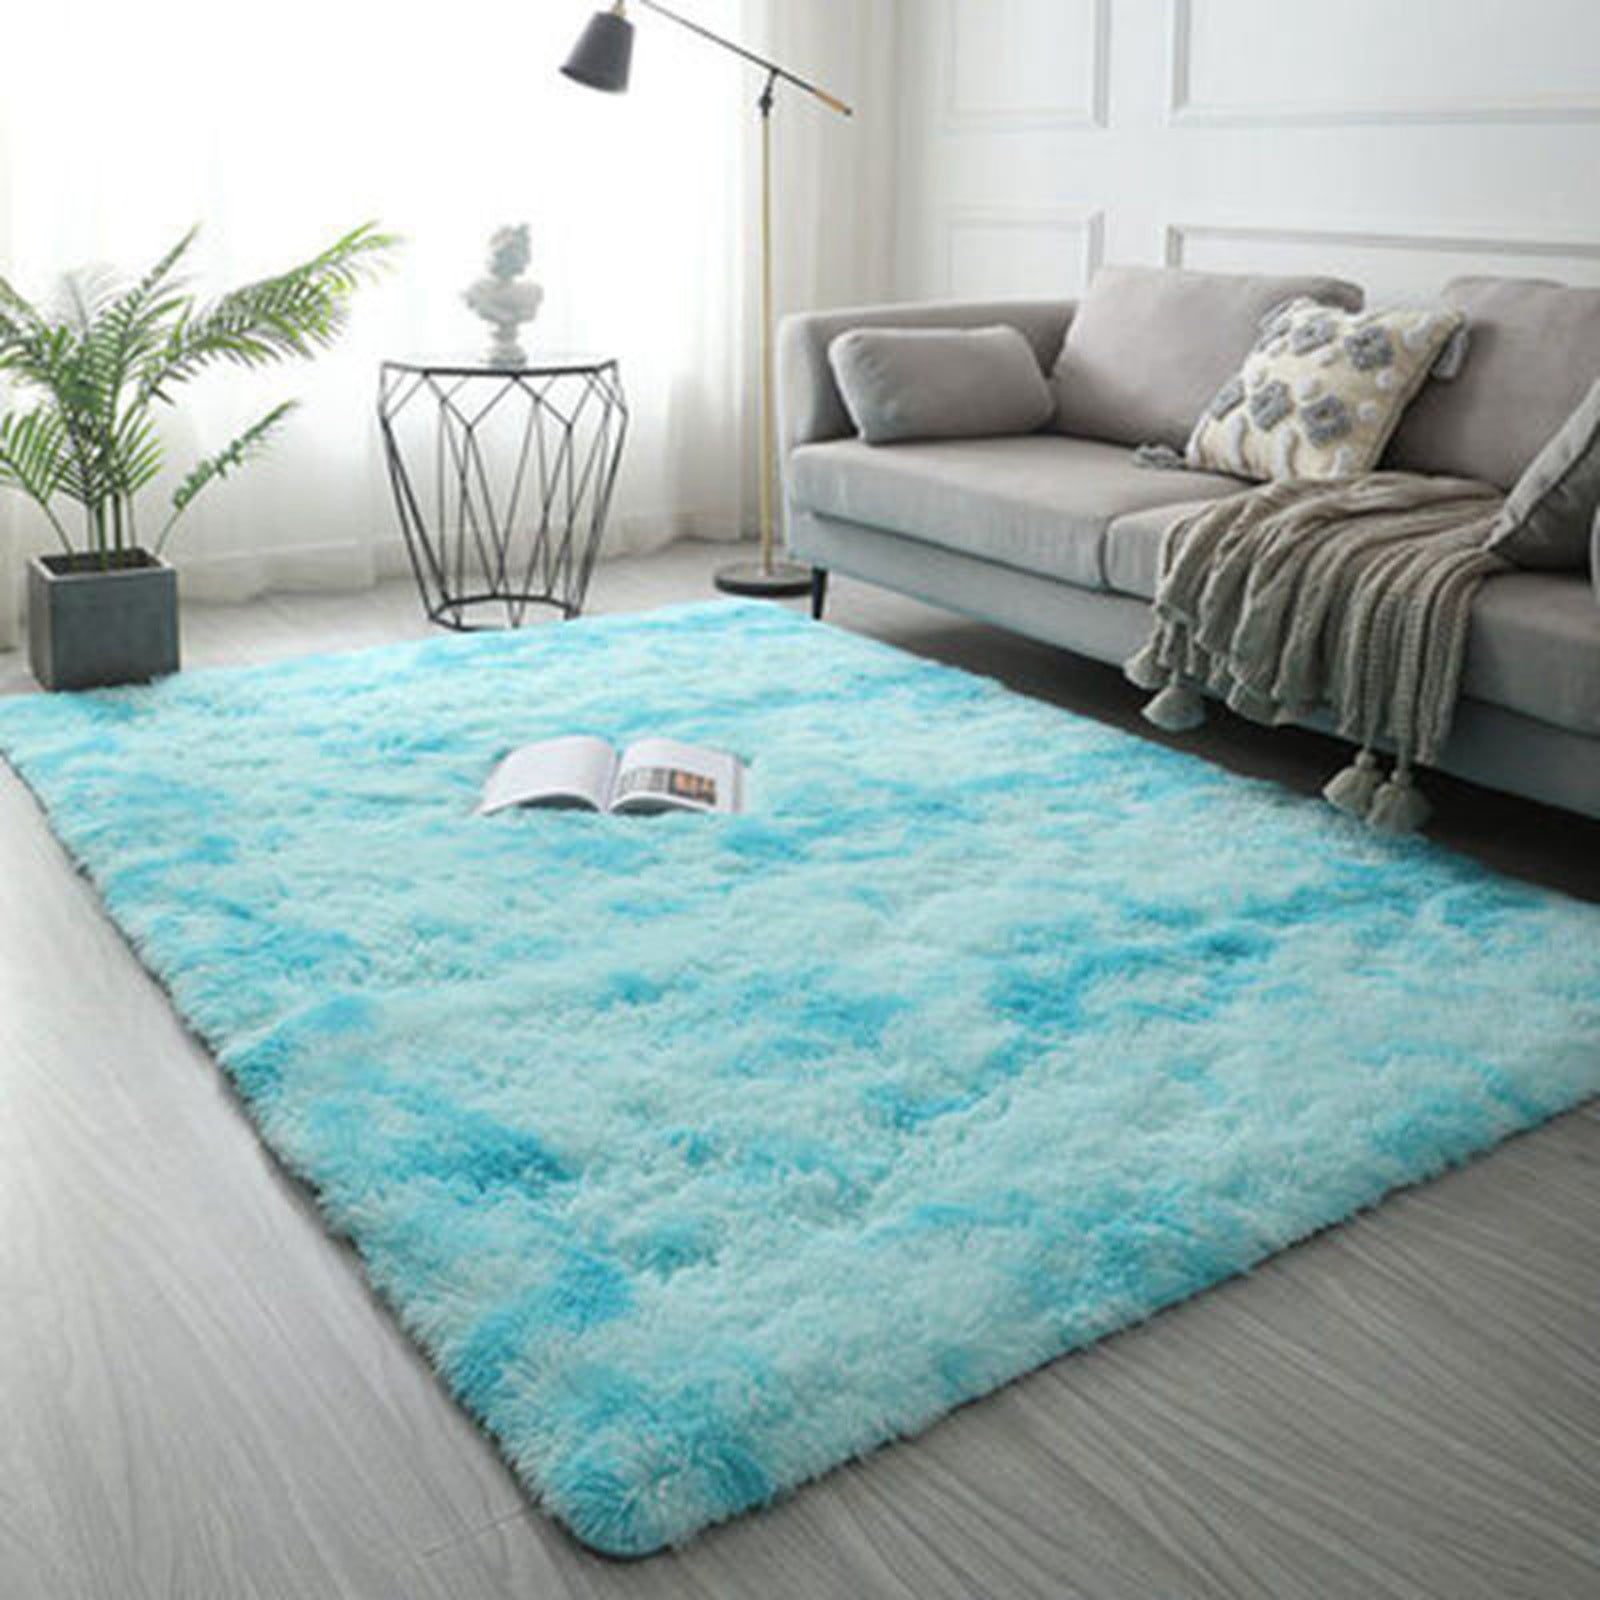 Plush Soft Fluffy Rug Soft Living Room Bed Large Carpet Bedroom Floor Mat Decor Light Blue -